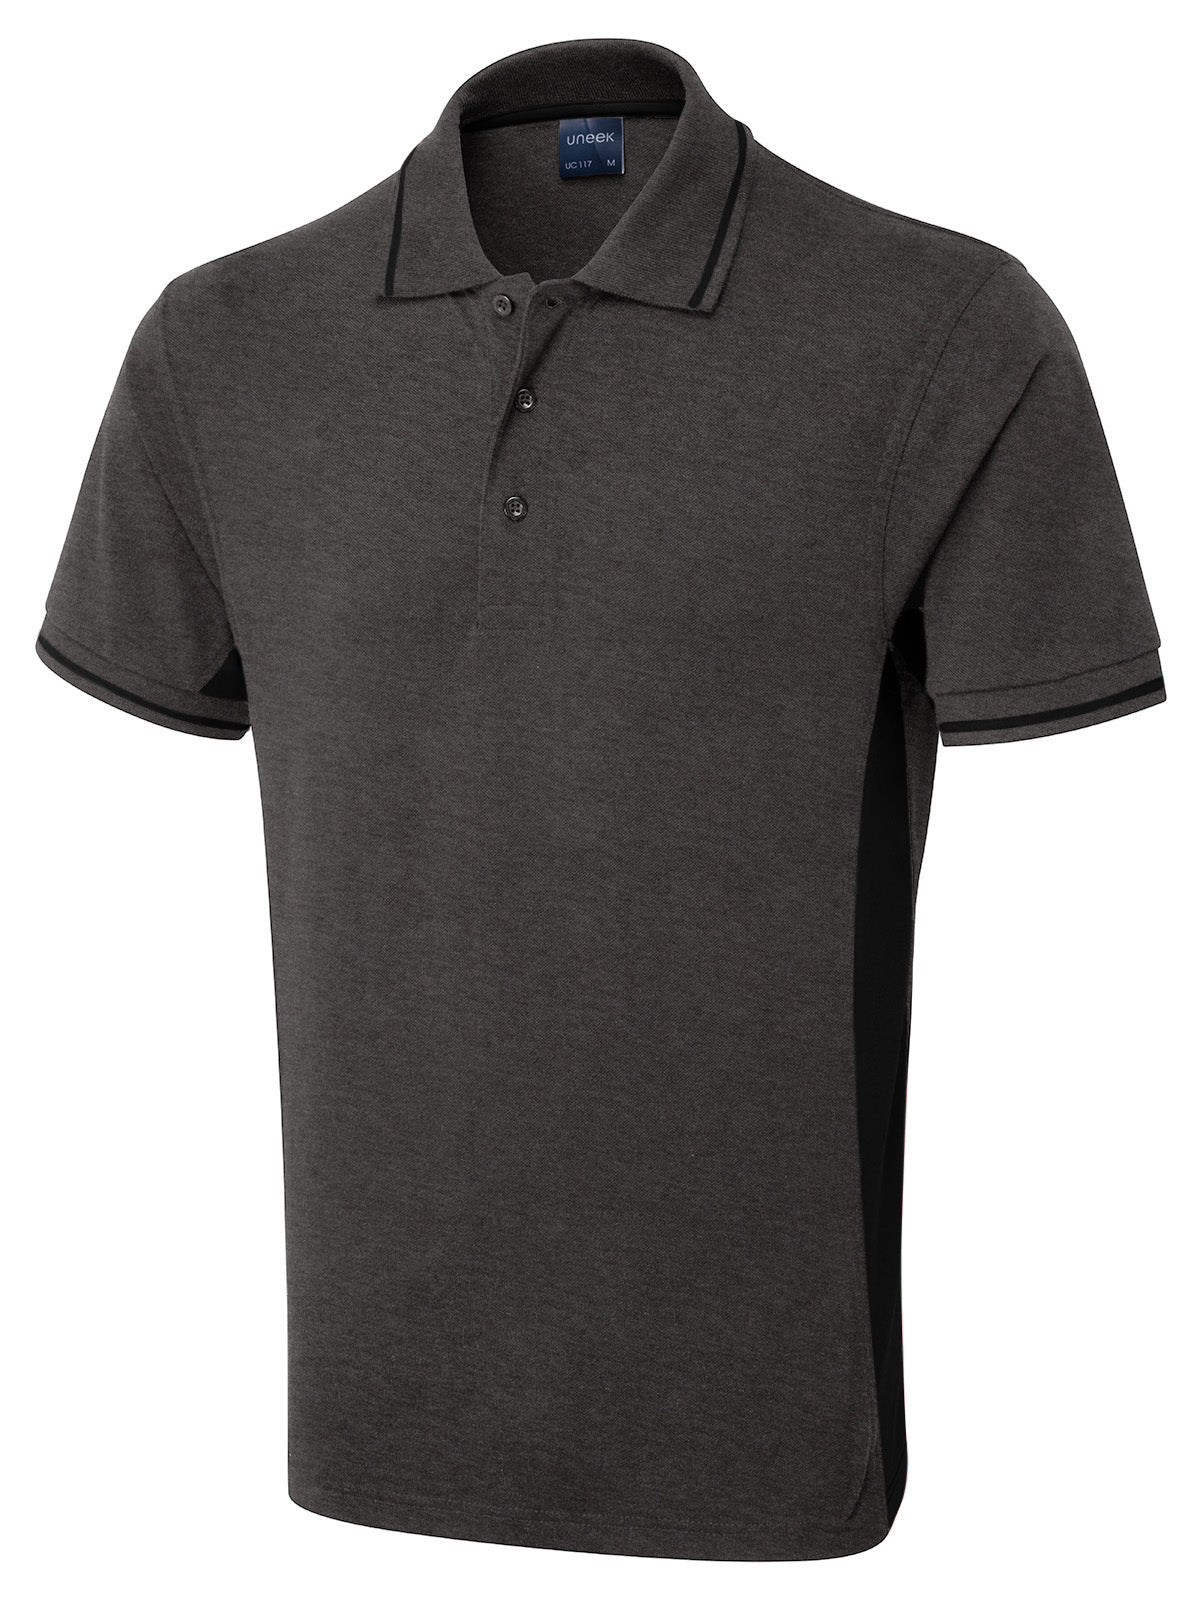 Uneek Two Tone Polo Shirt UC117 - Charcoal/Black